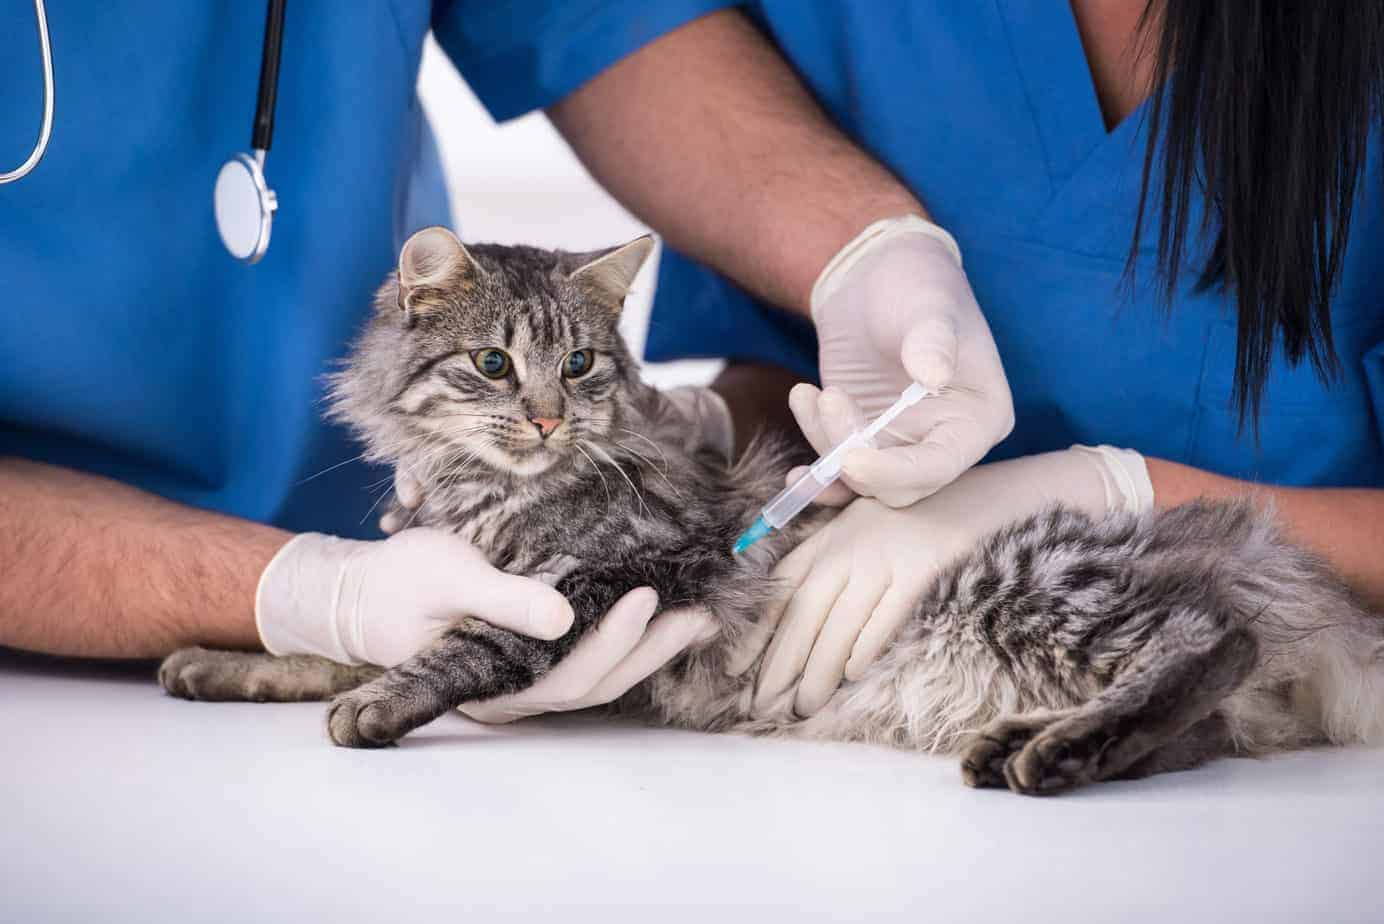 Is Covid-19 coronavirus as dangerous in cats as it is in humans? 3